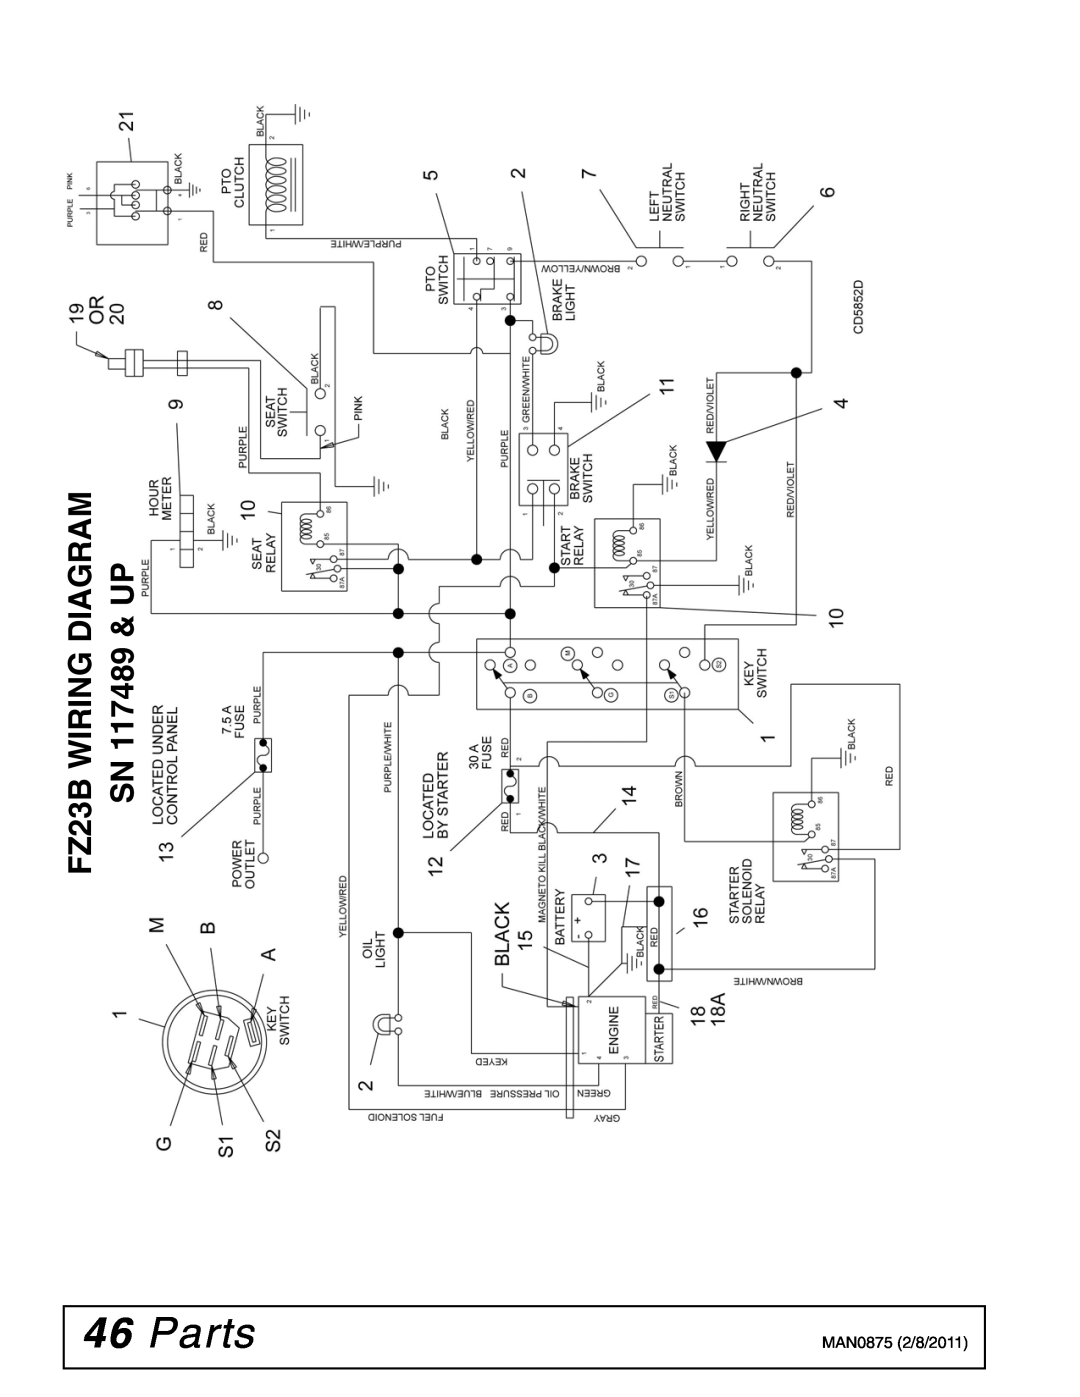 Woods Equipment FZ28K manual Parts, Diagram, Up, FZ23B WIRING 